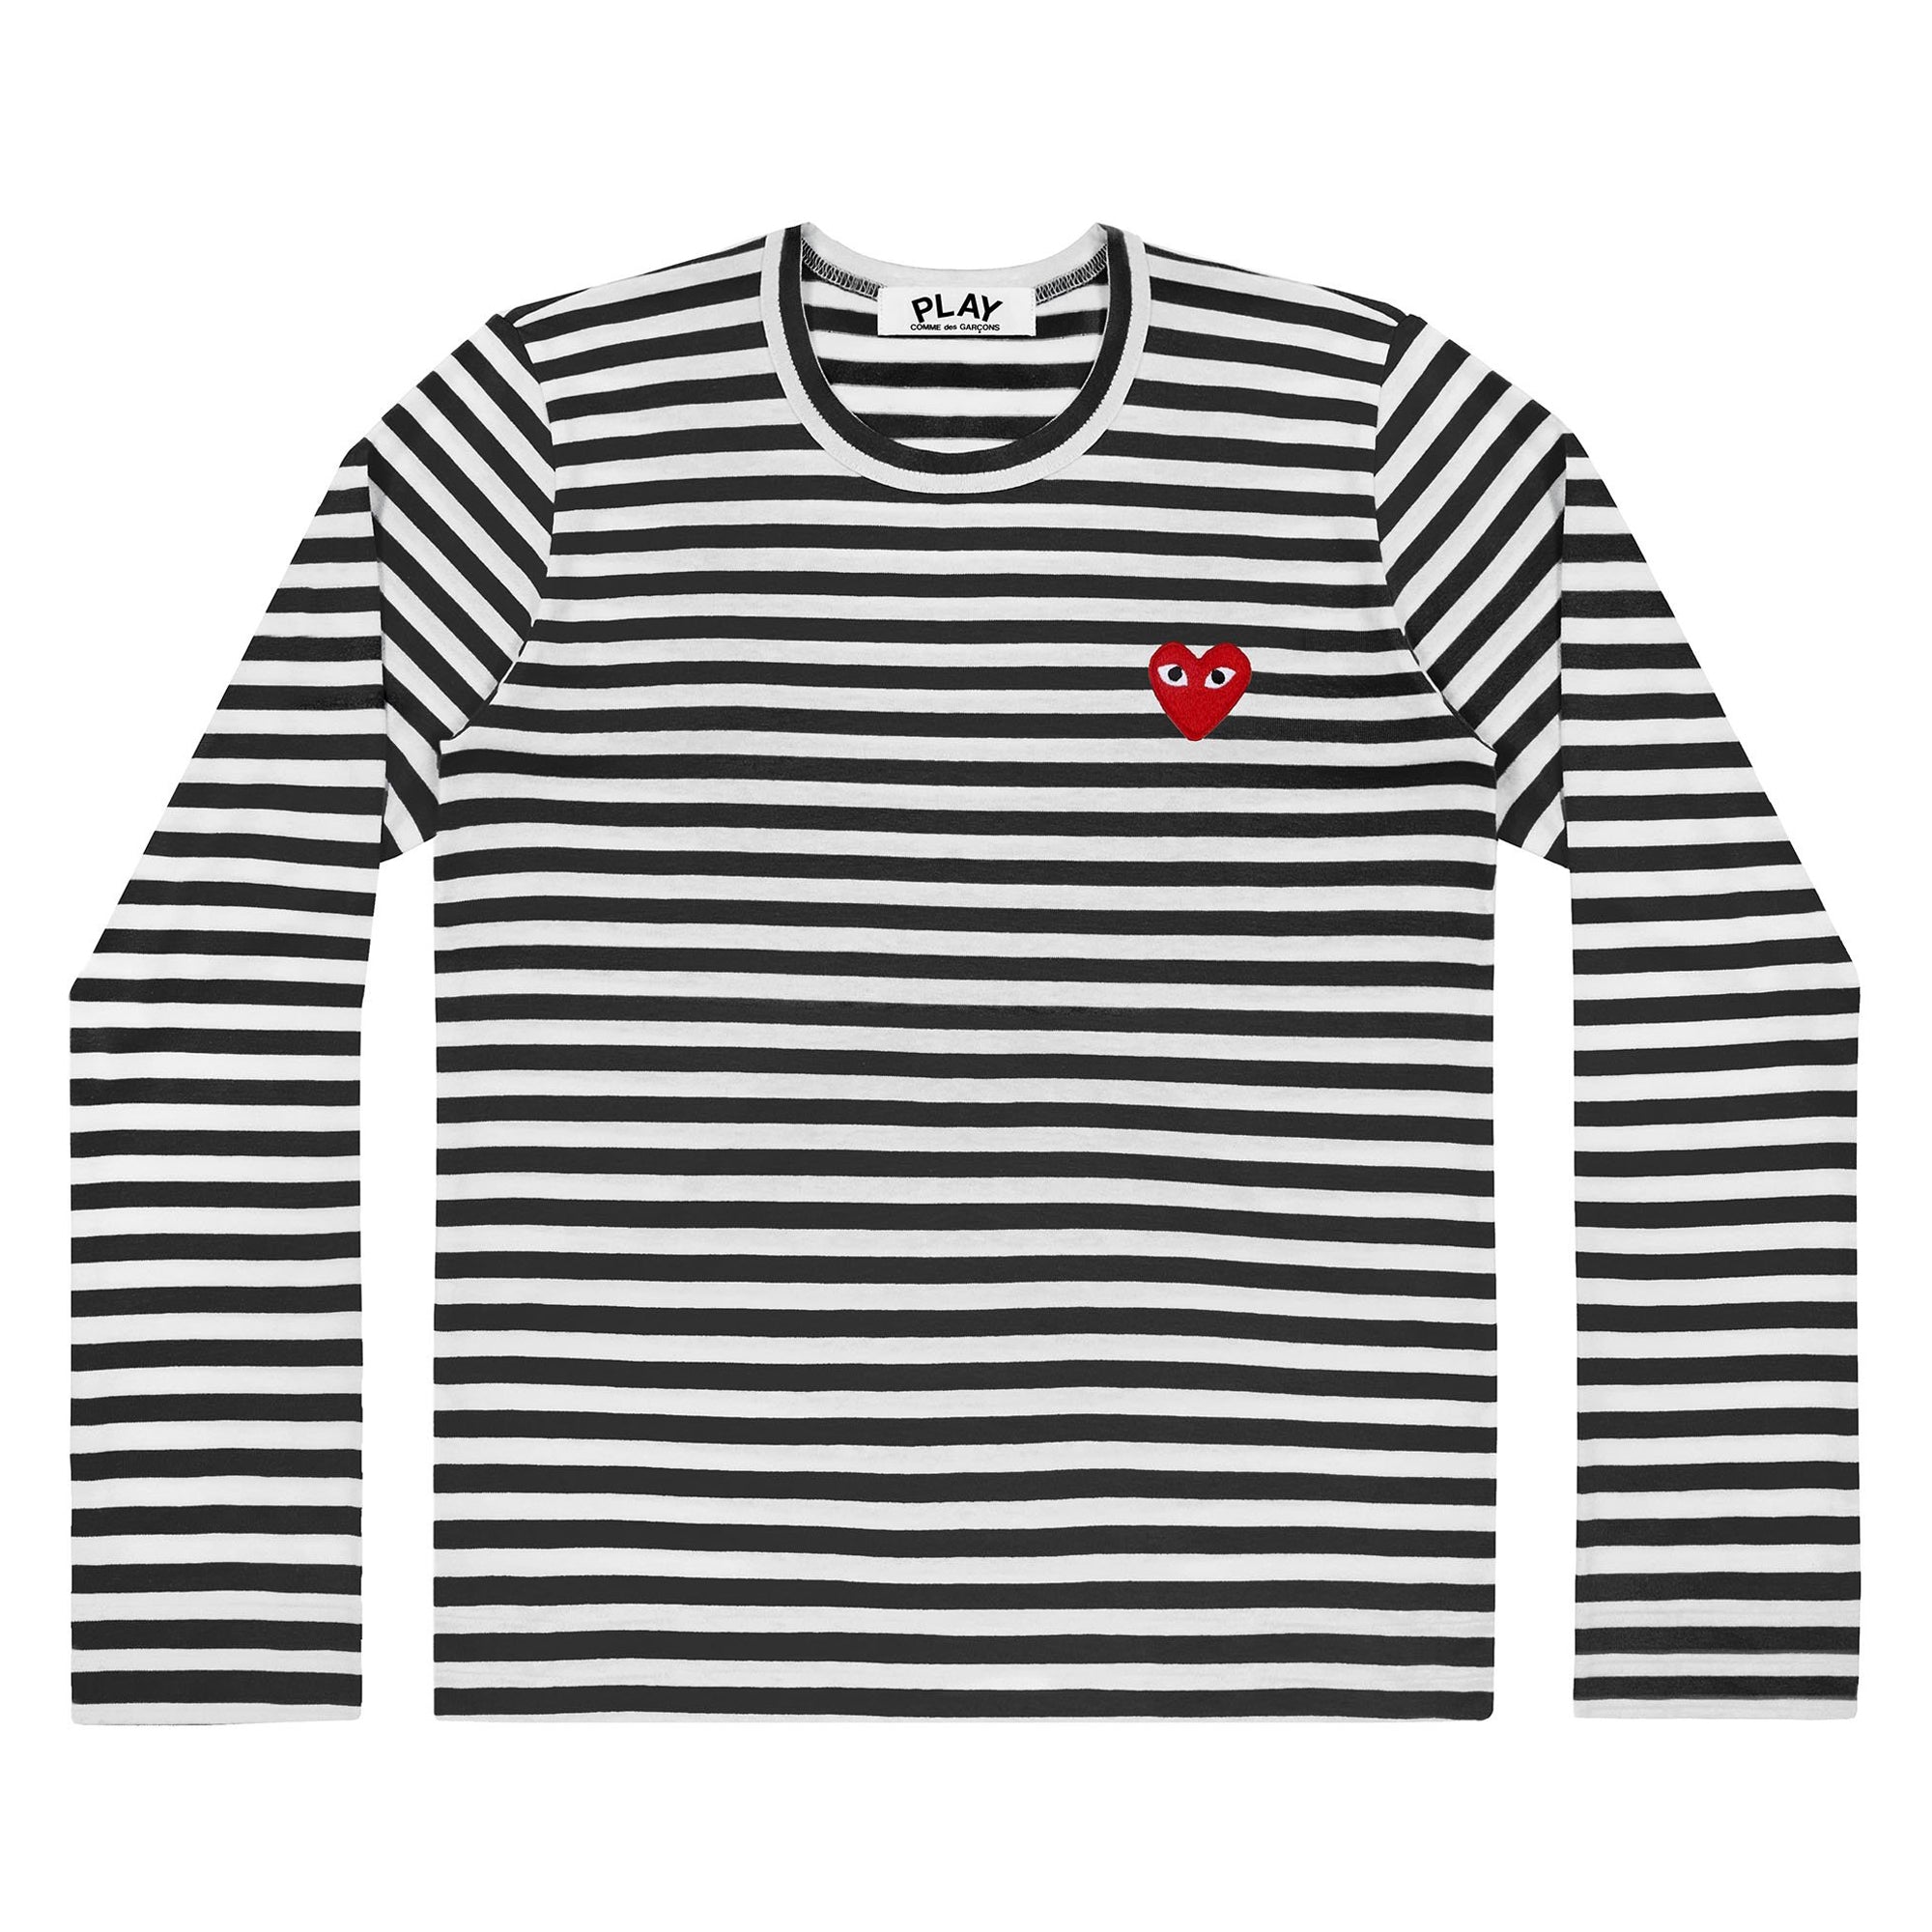 PLAY CDG Striped T-Shirt プレイコムデギャルソン-